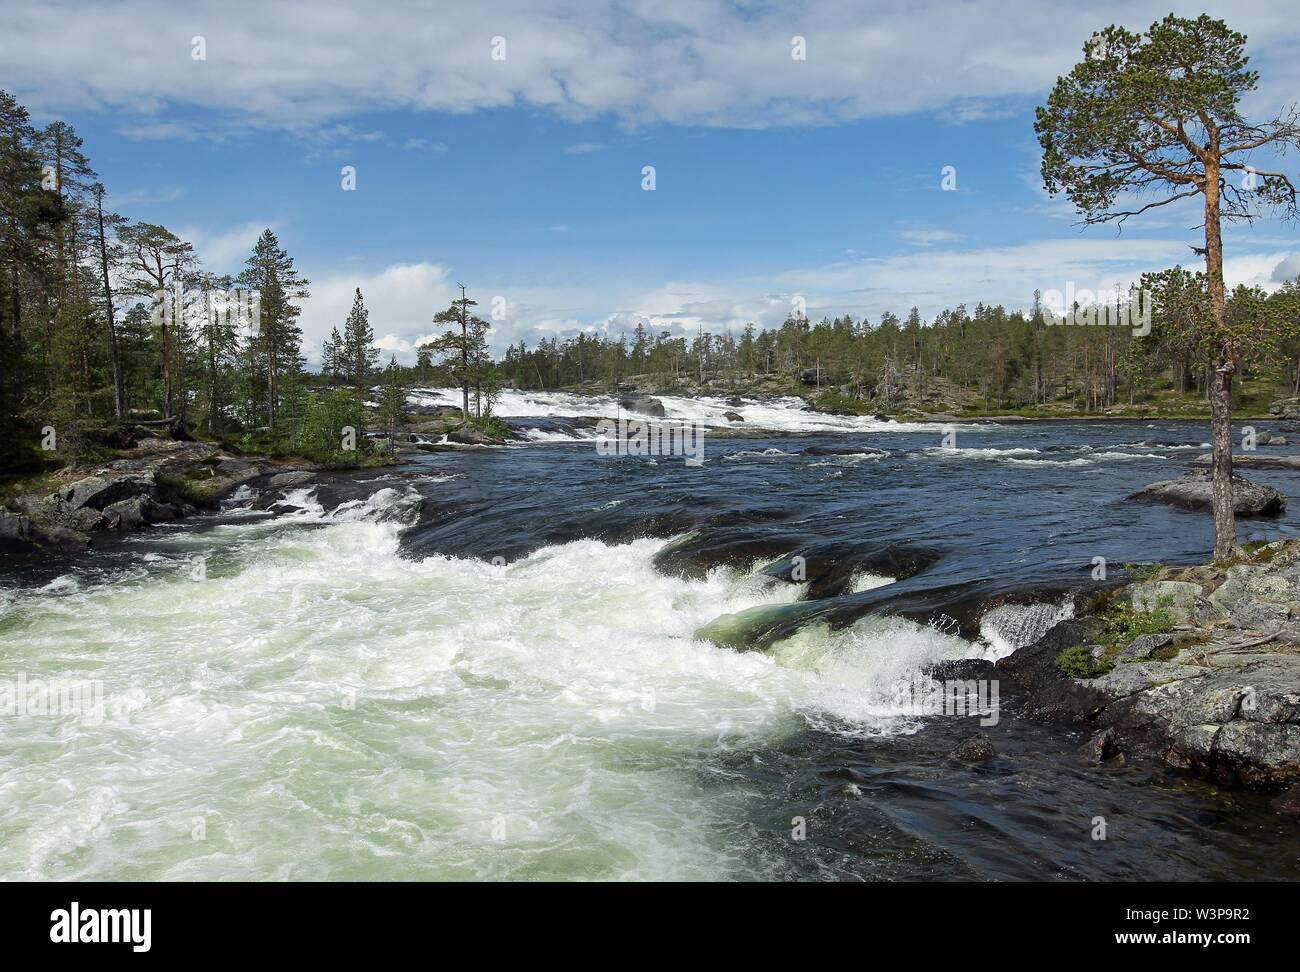 Rapids Trollforsen in the river Pitealven, Moskosel, Arvidsjaur, Lapland, Sweden Stock Photo